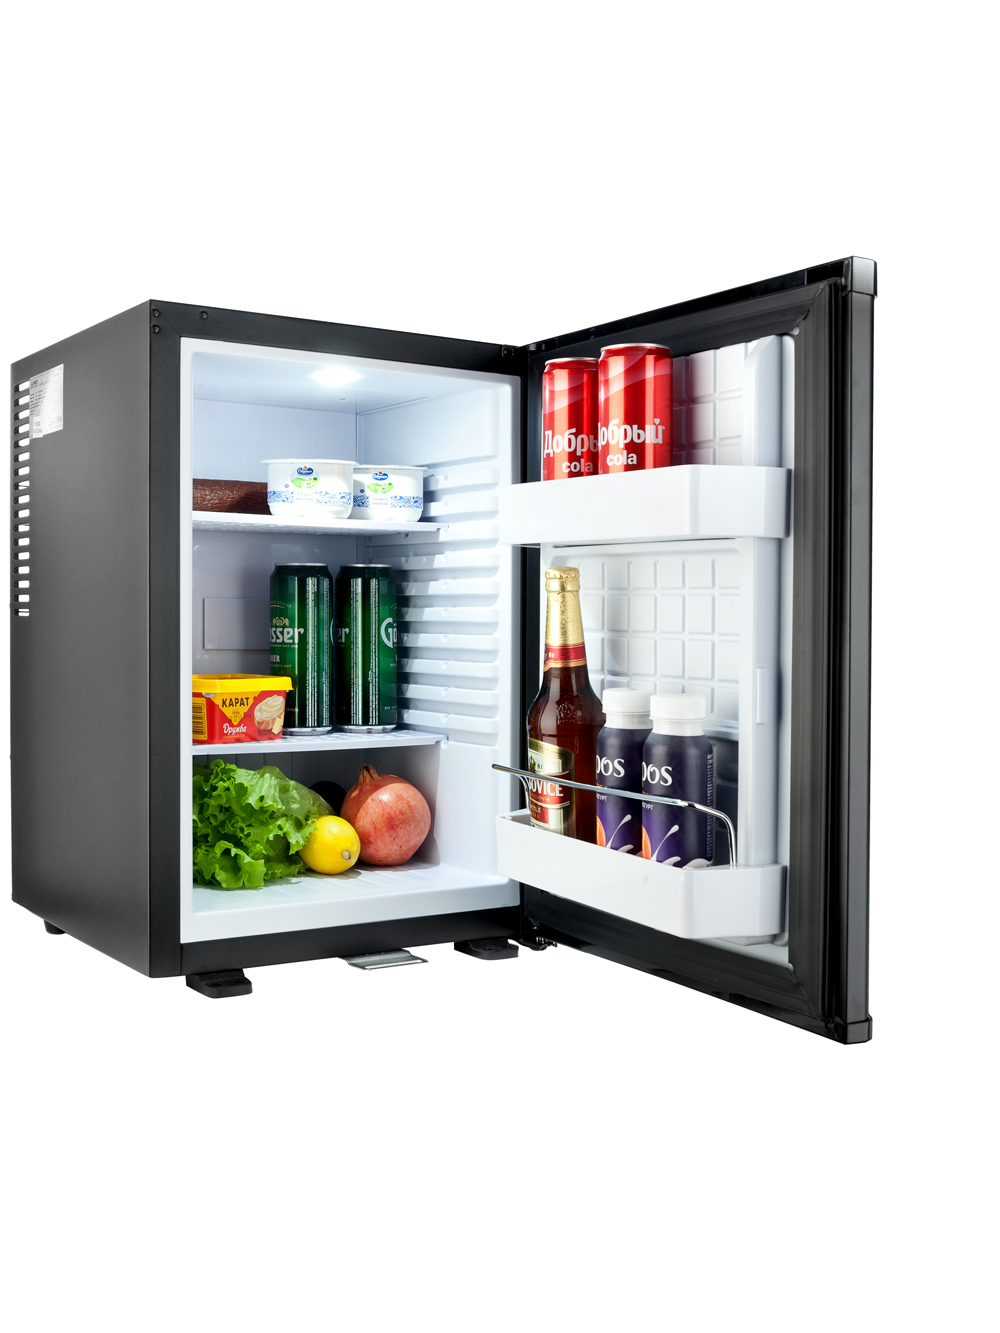 Мини-холодильник FA-5172